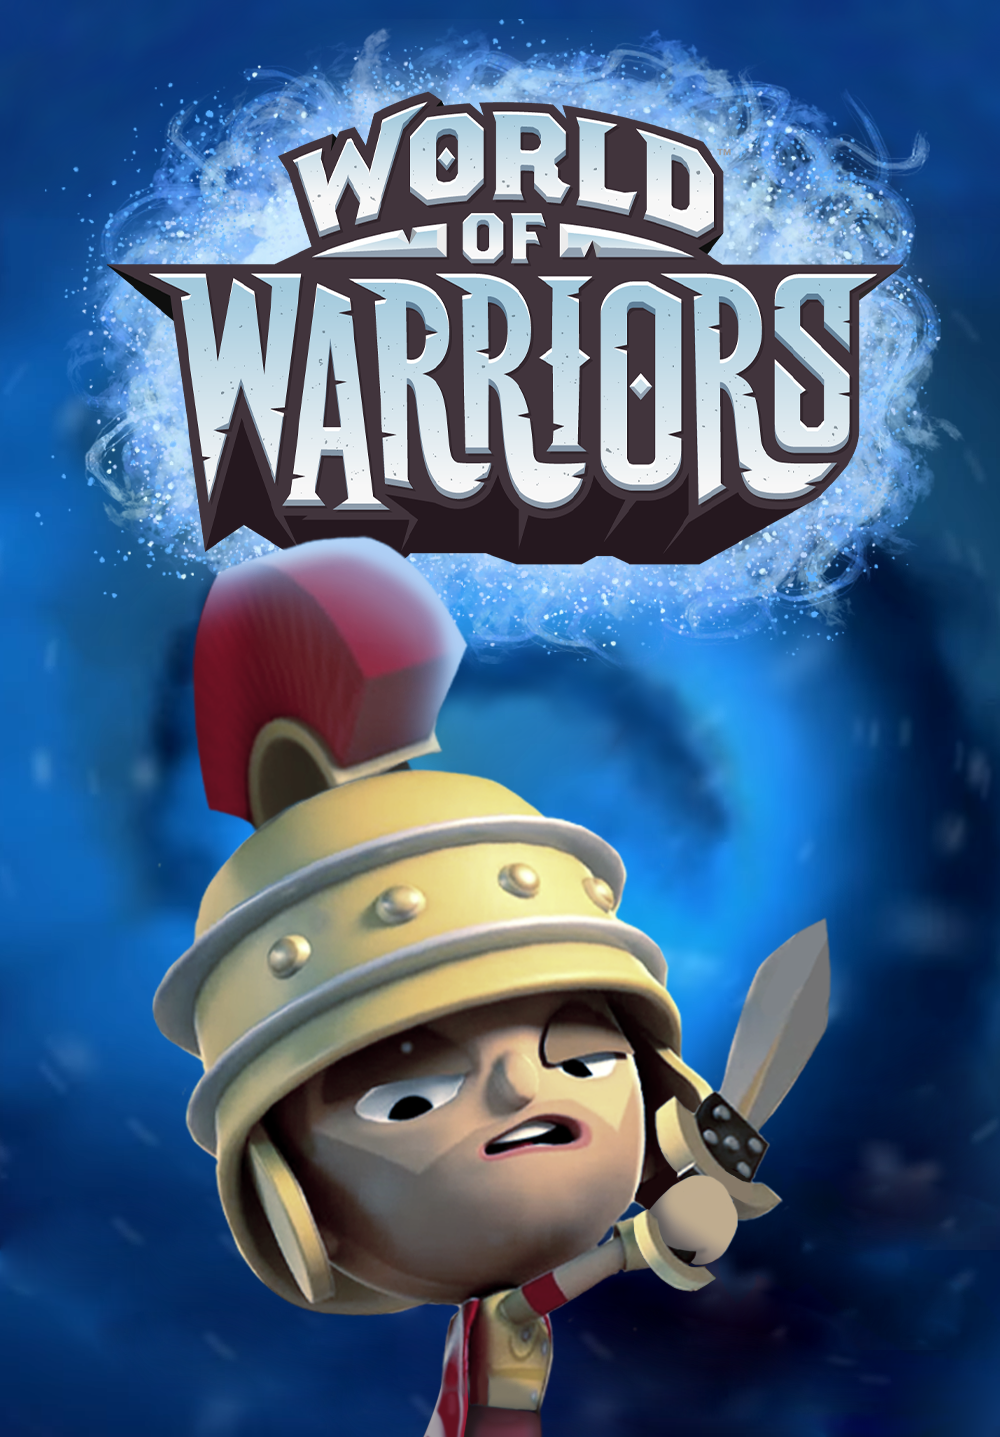 World-of-warriors-poster